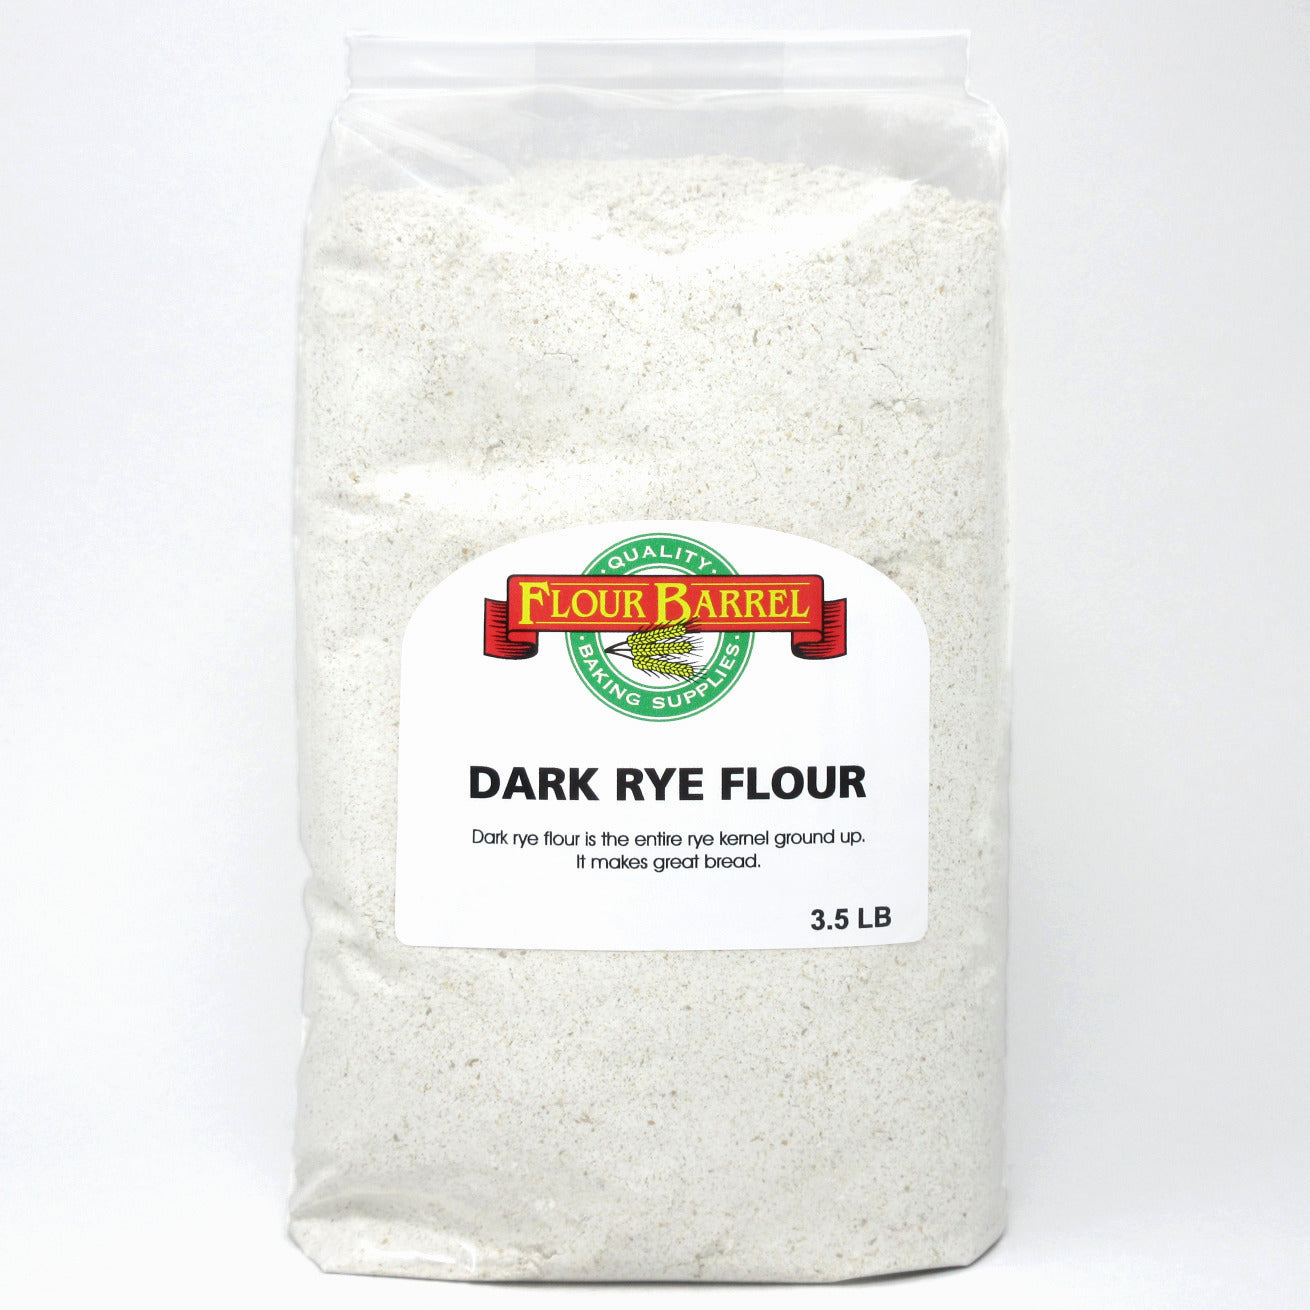 Flour Barrel product image - Dark Rye Flour